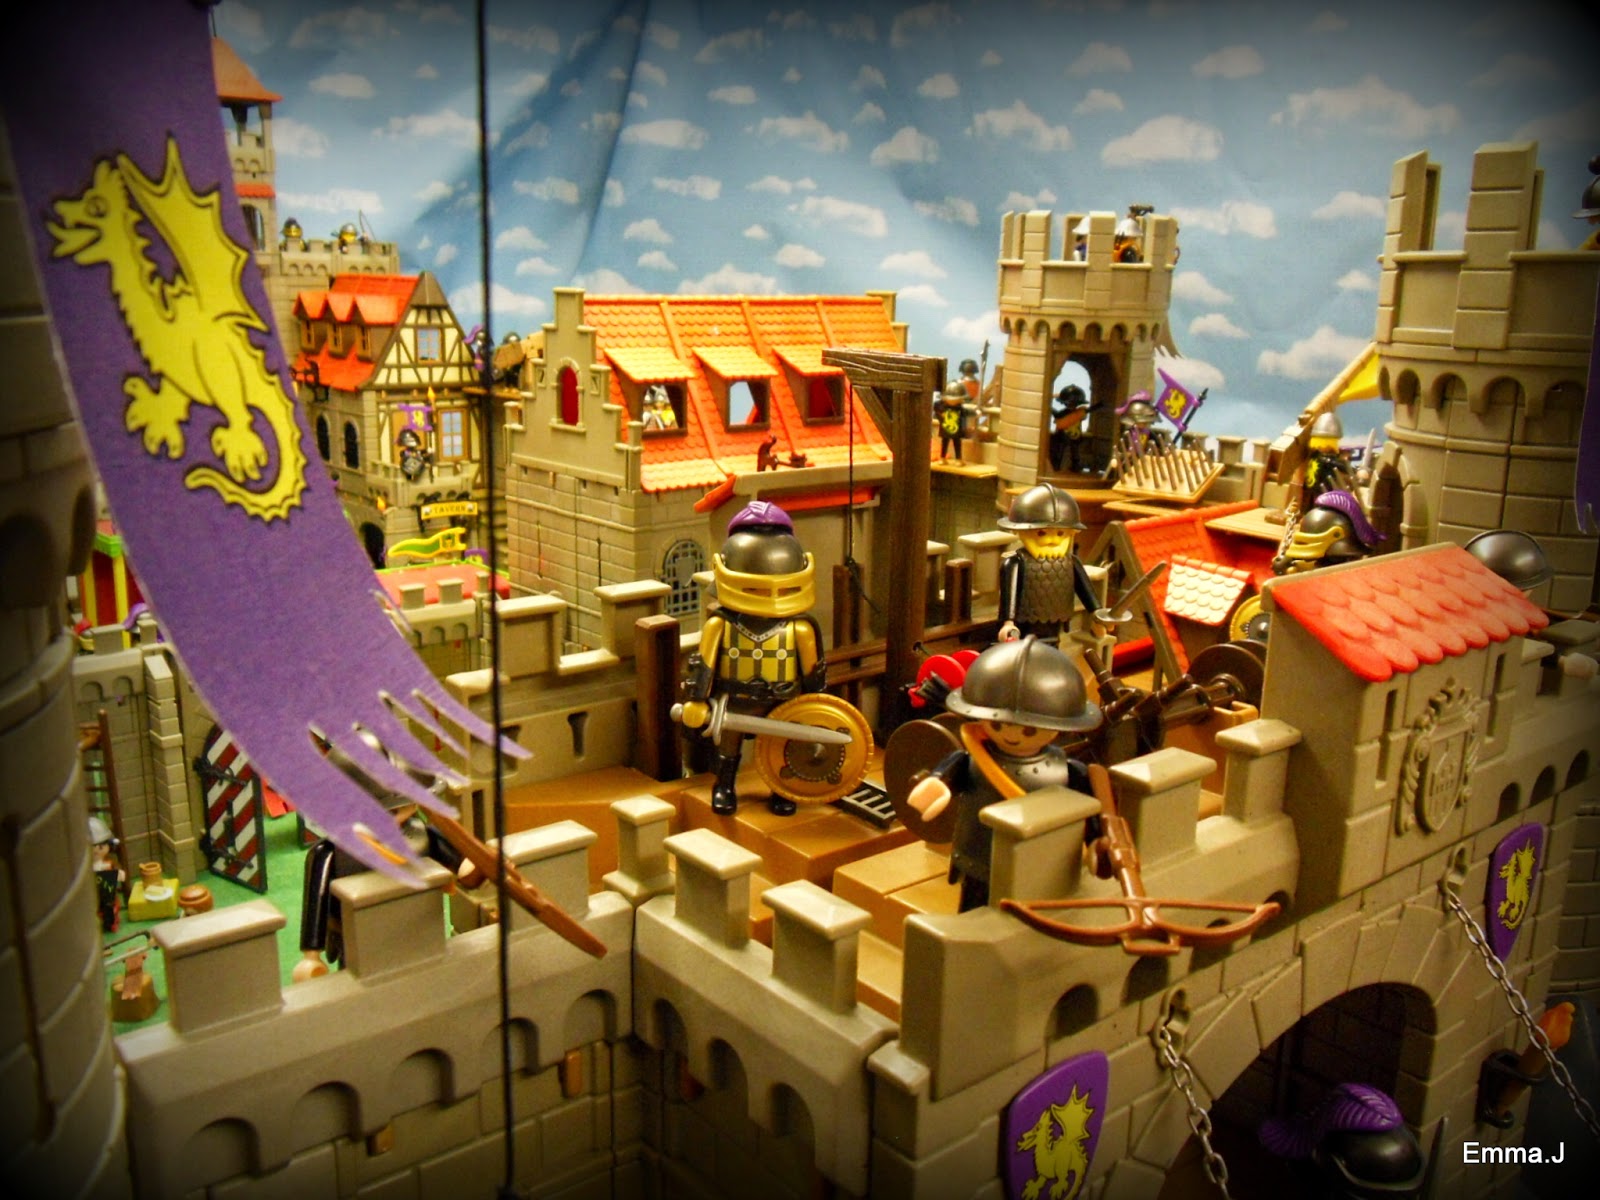 The Castle | Emma.J's Playmobil